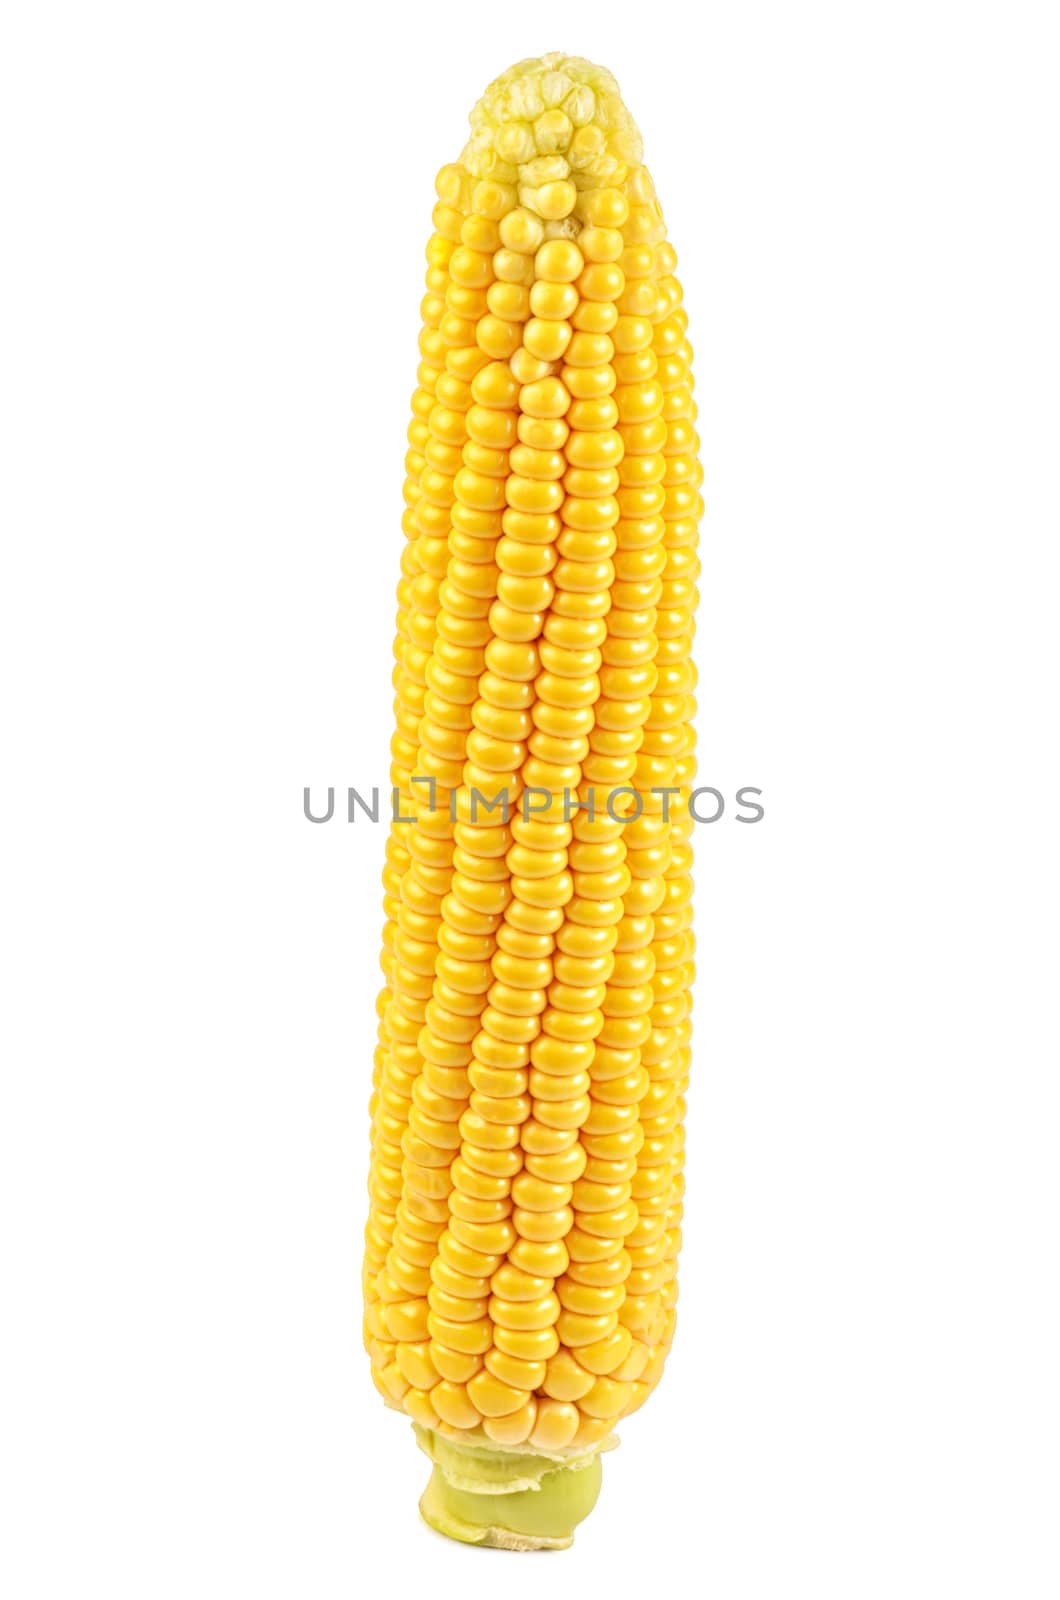 The corn on the cob close up